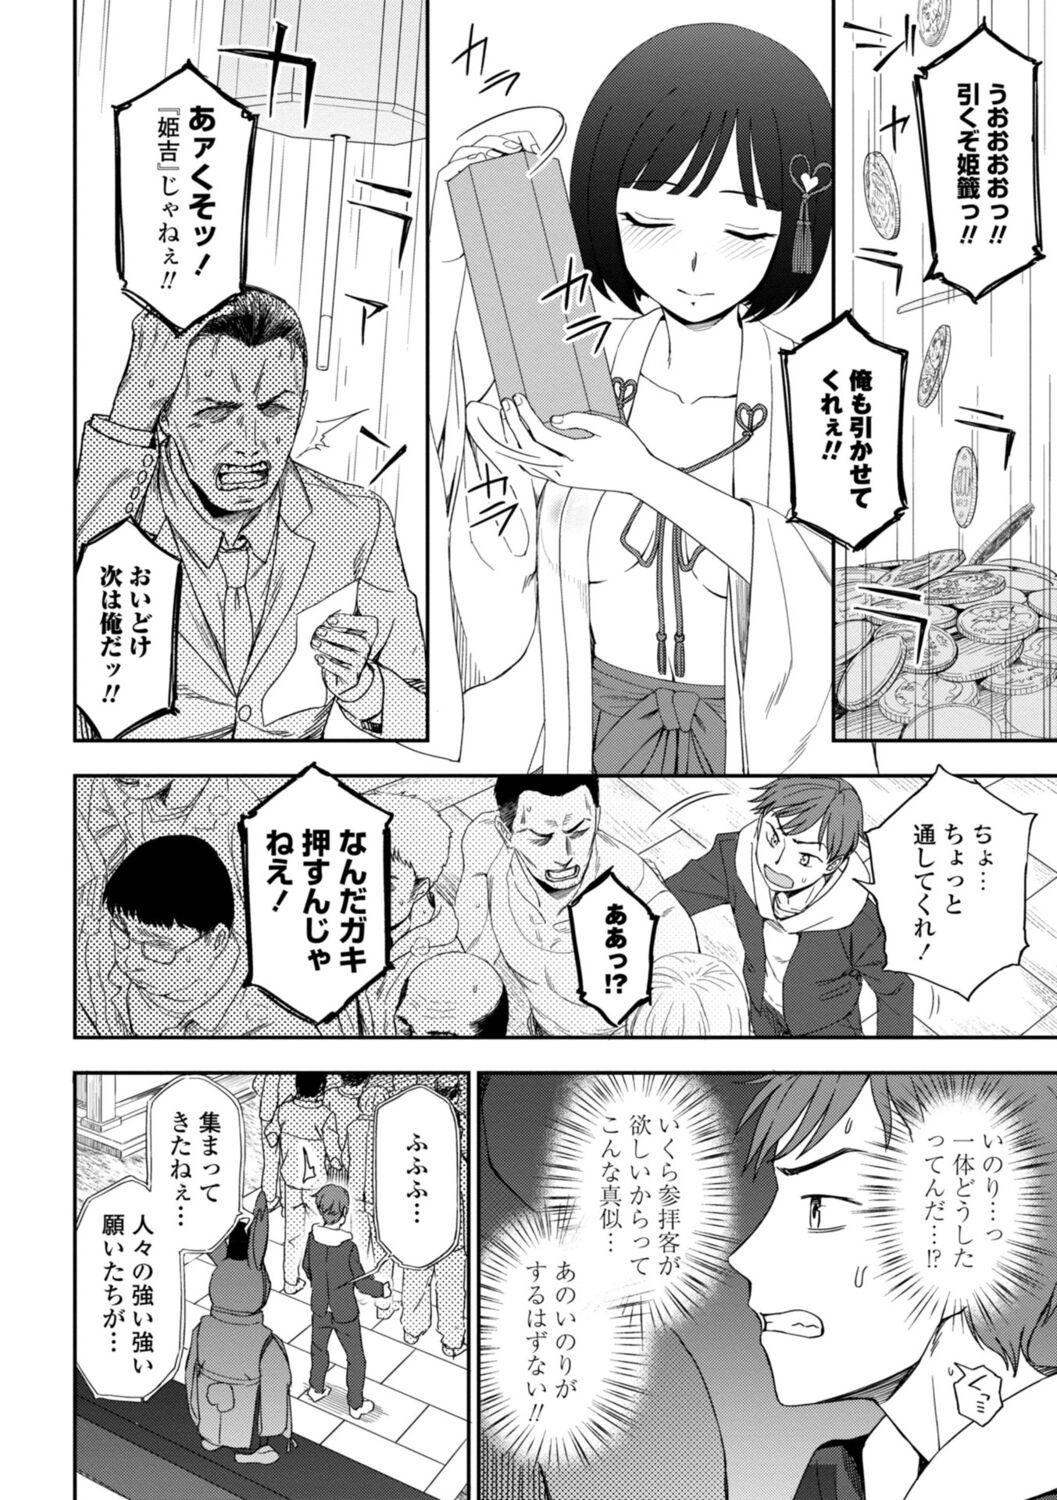 Soloboy Watashi no Subete Sasagemasu - I'll give you all of mine. Chastity - Page 8